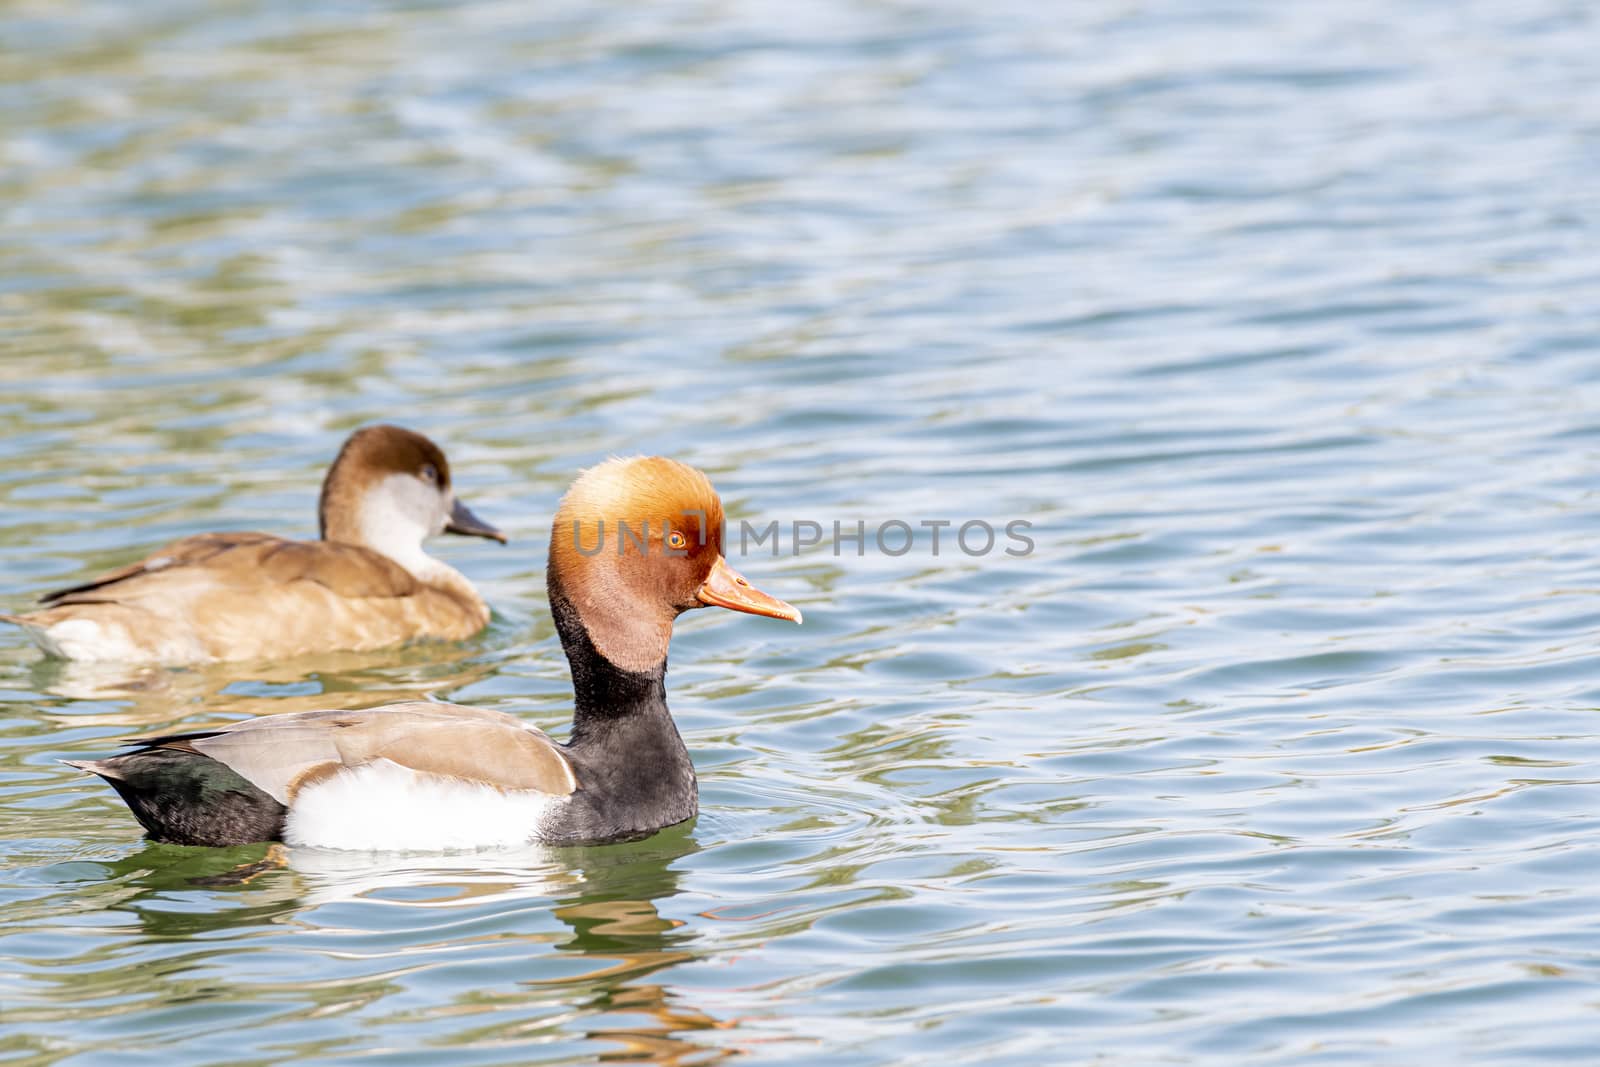 Kind of Ducks seen near Al Qudra Lakes, Dubai, United Arab Emirates (UAE), Middle East, Arabian Peninsula